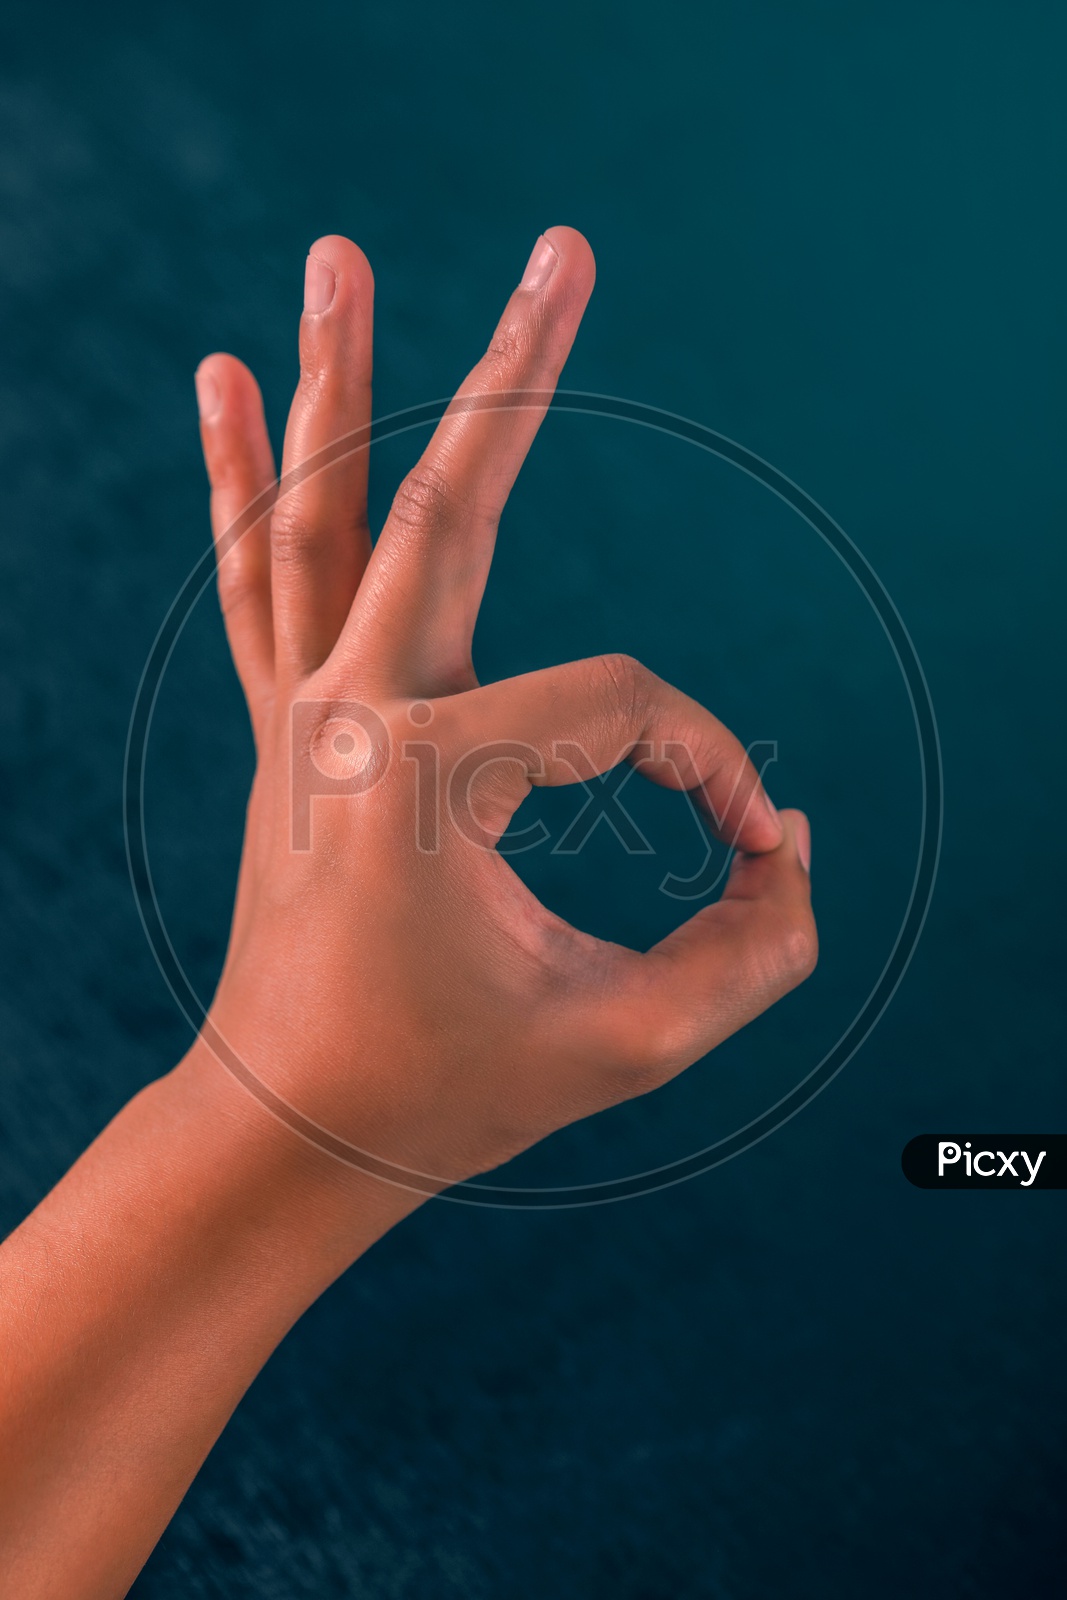 human Hand Showing  OK  or Super  Symbol or Gesture